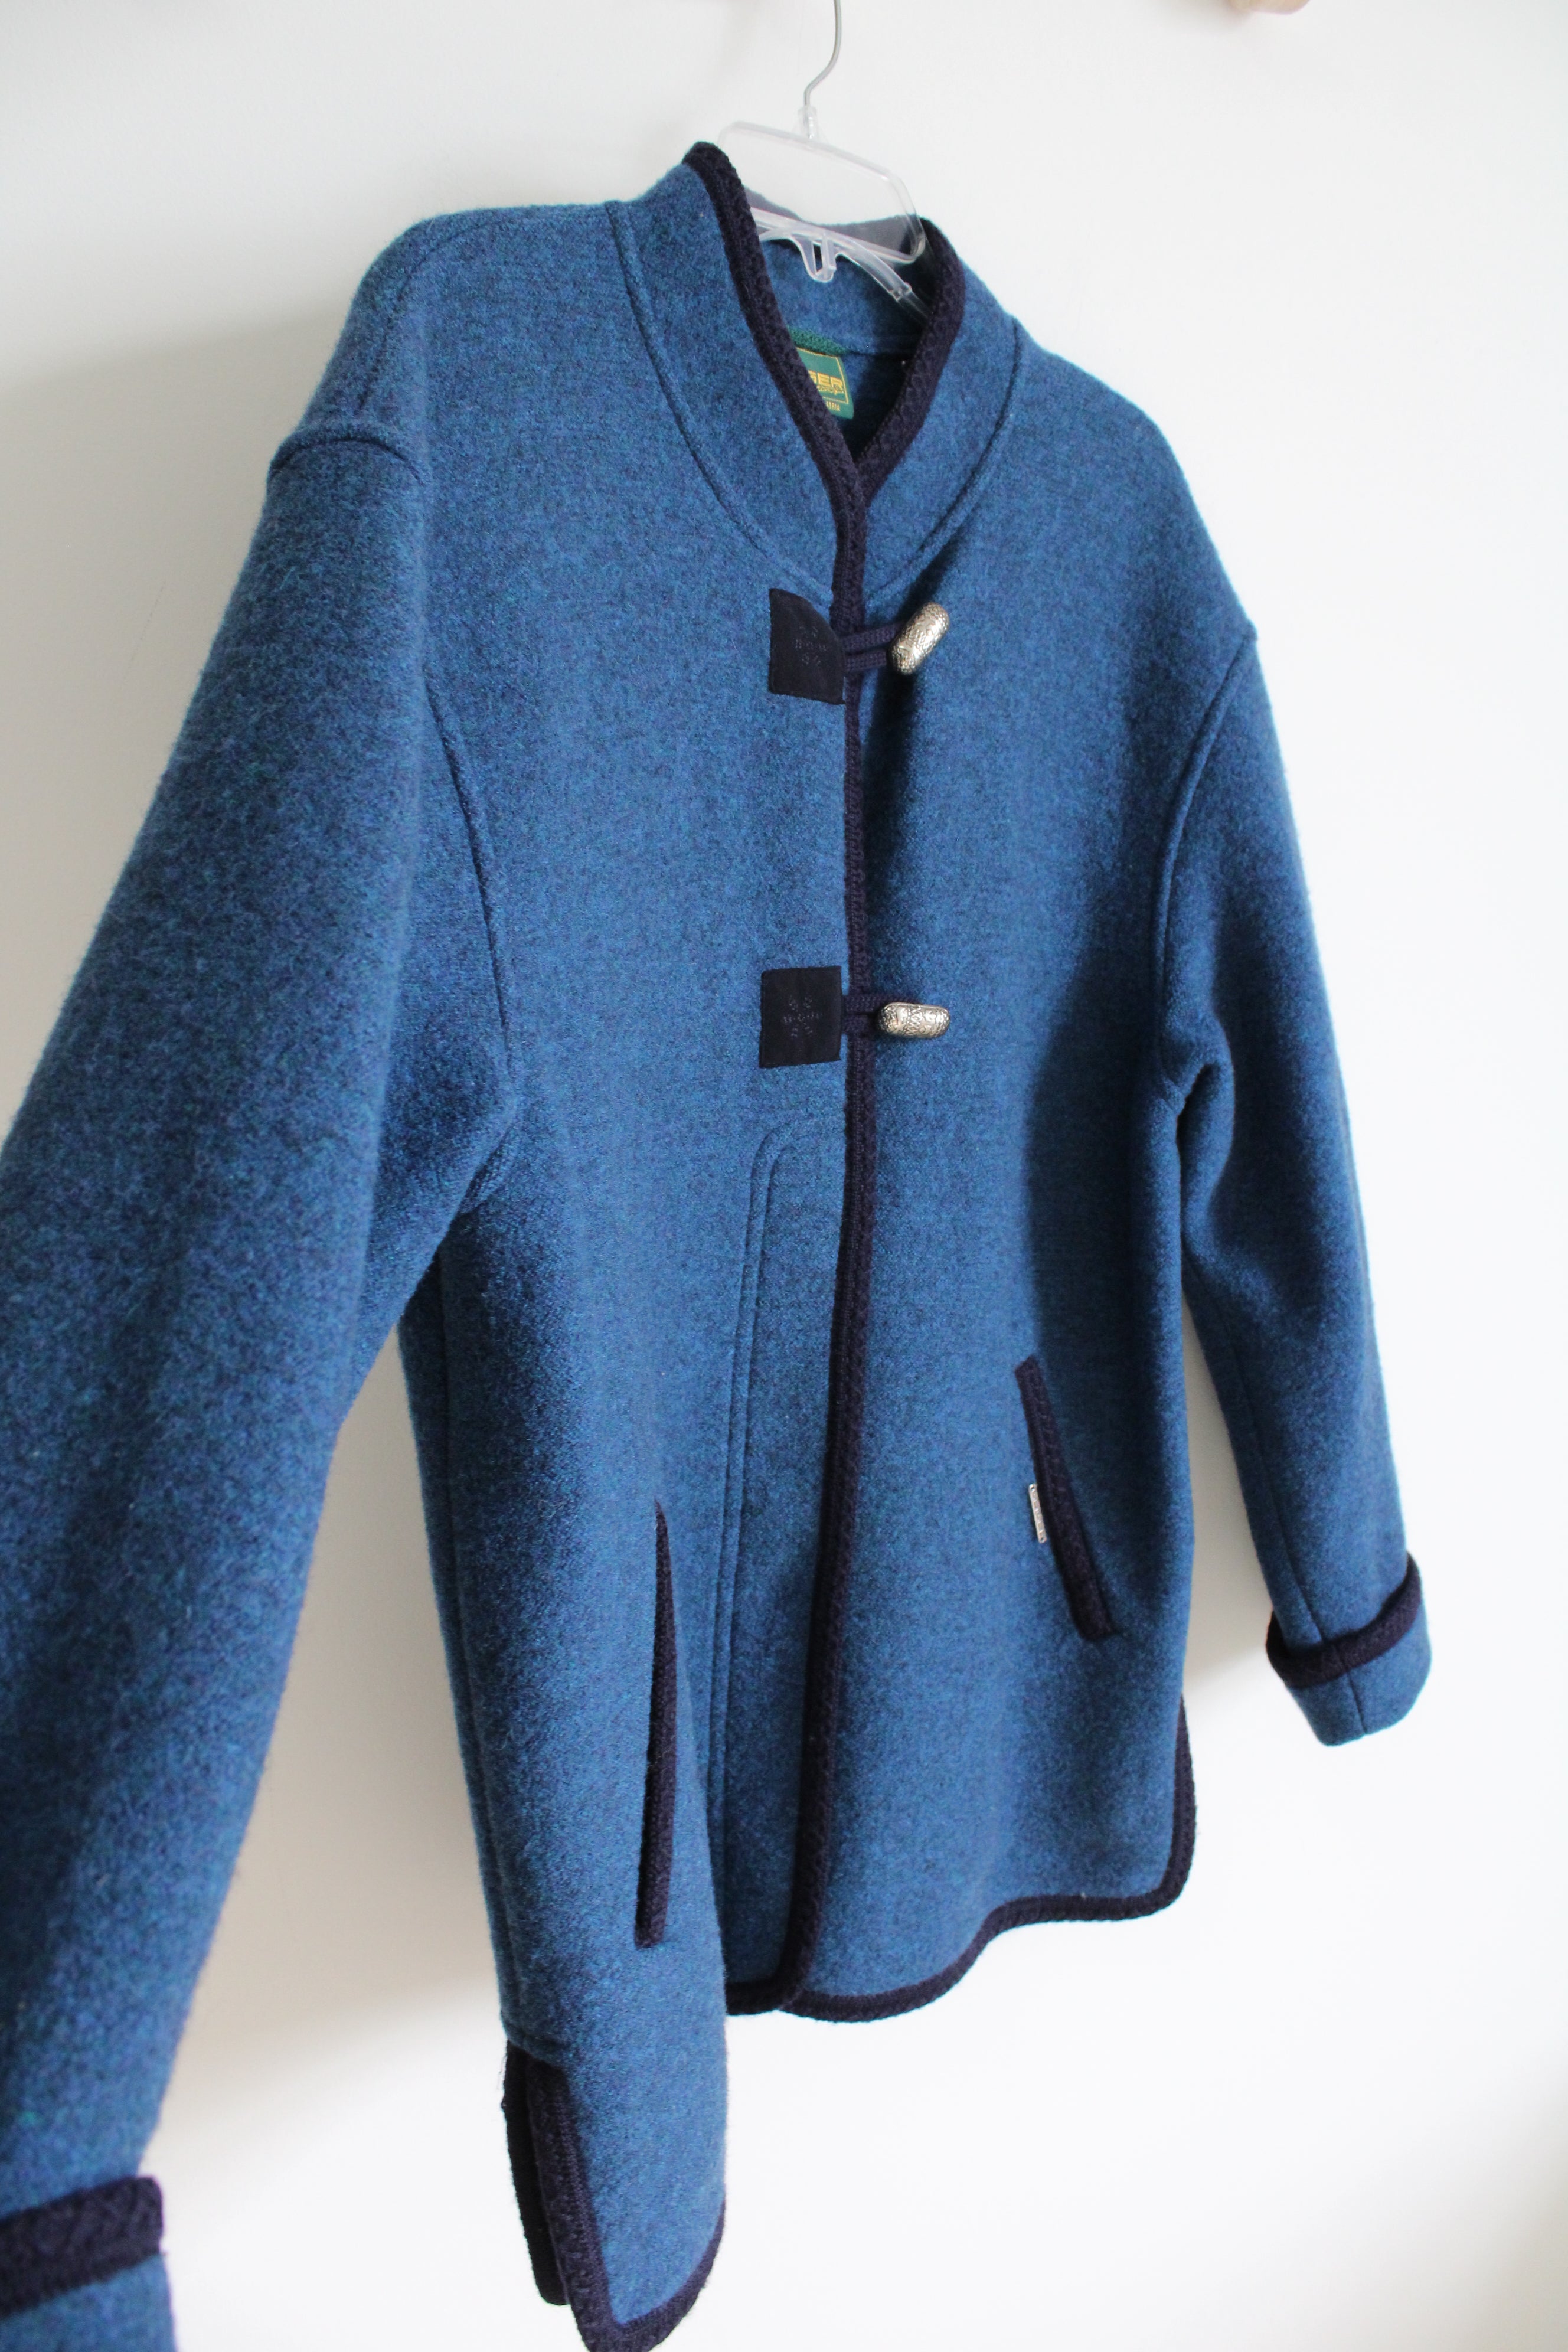 Geiger Collectors Blue Wool Jacket | 36